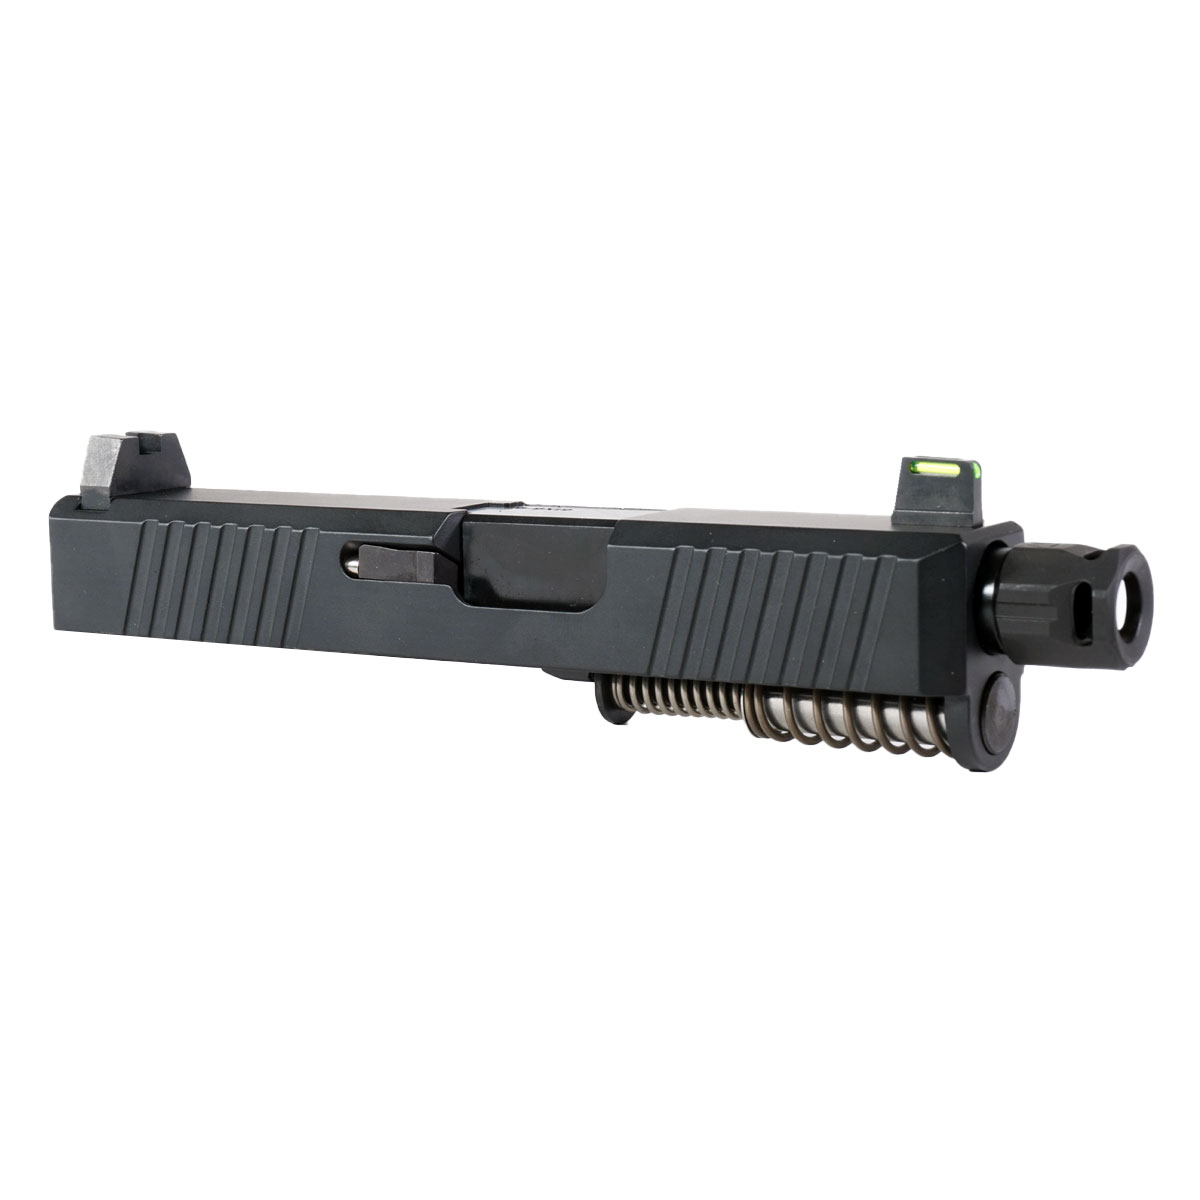 DD 'Providence Power' 9mm Complete Slide Kit - Glock 26 Gen 1-3 Compatible